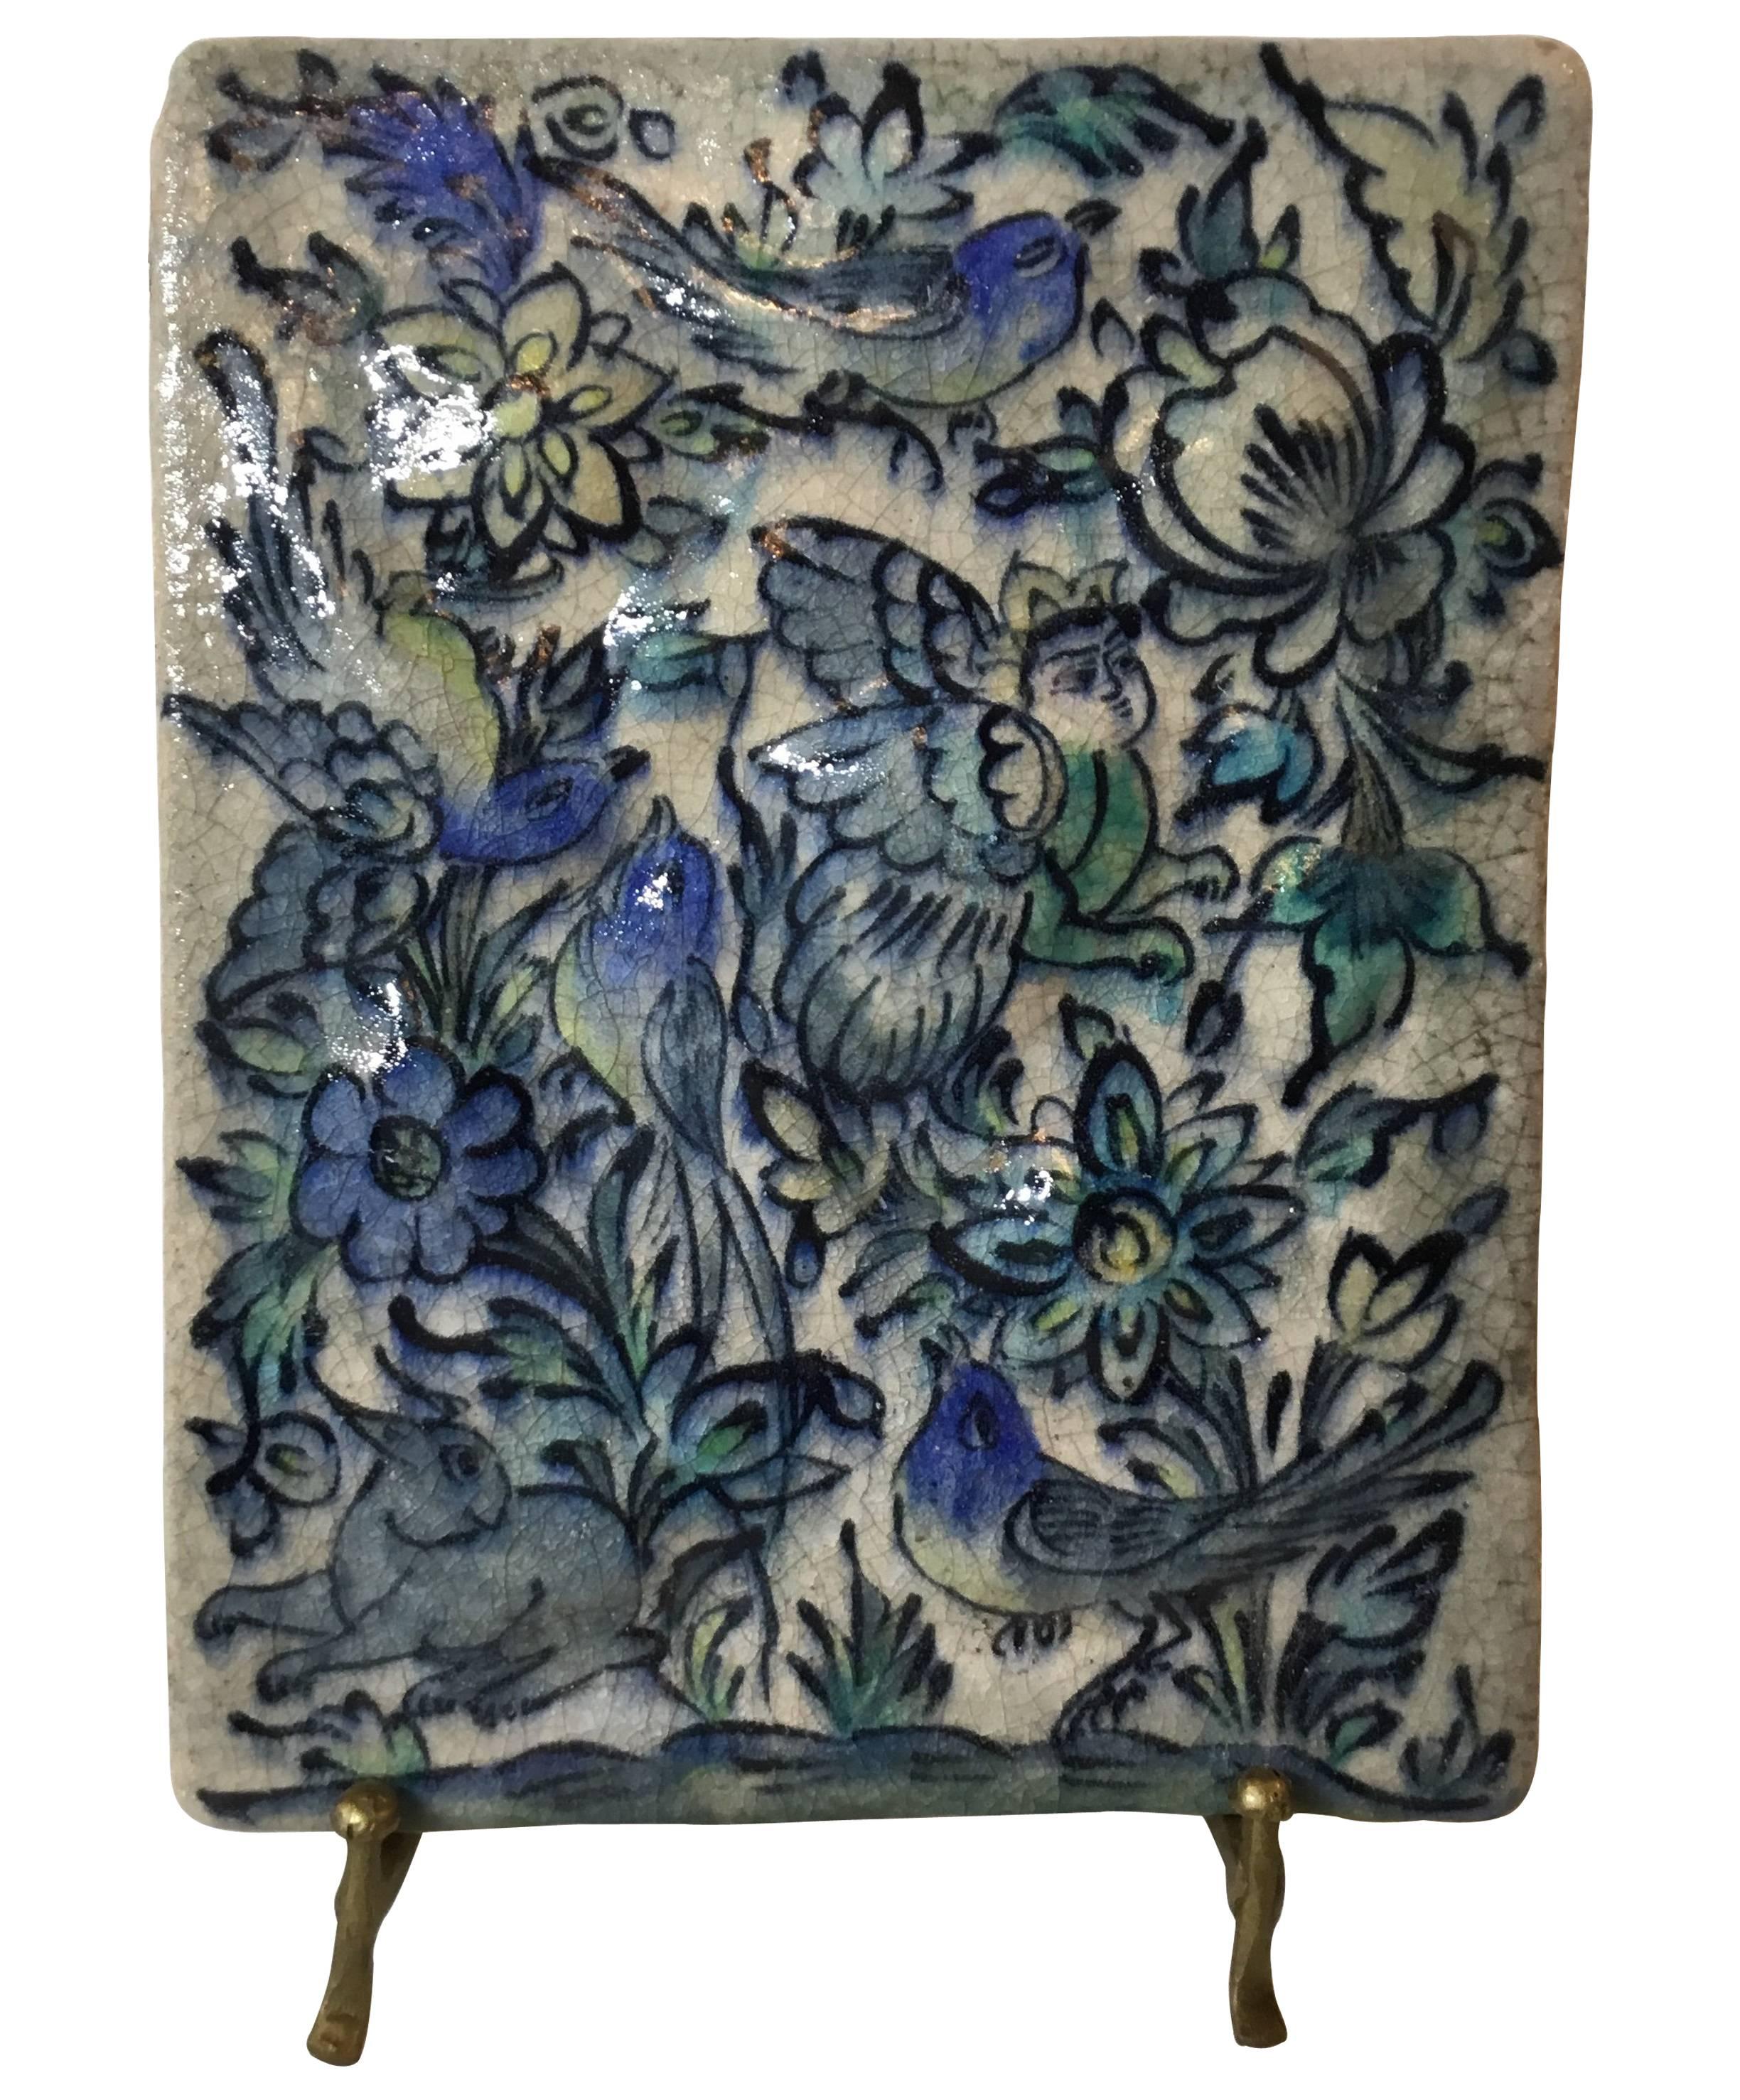 Exceptional Vintage Ceramic Persain Tile